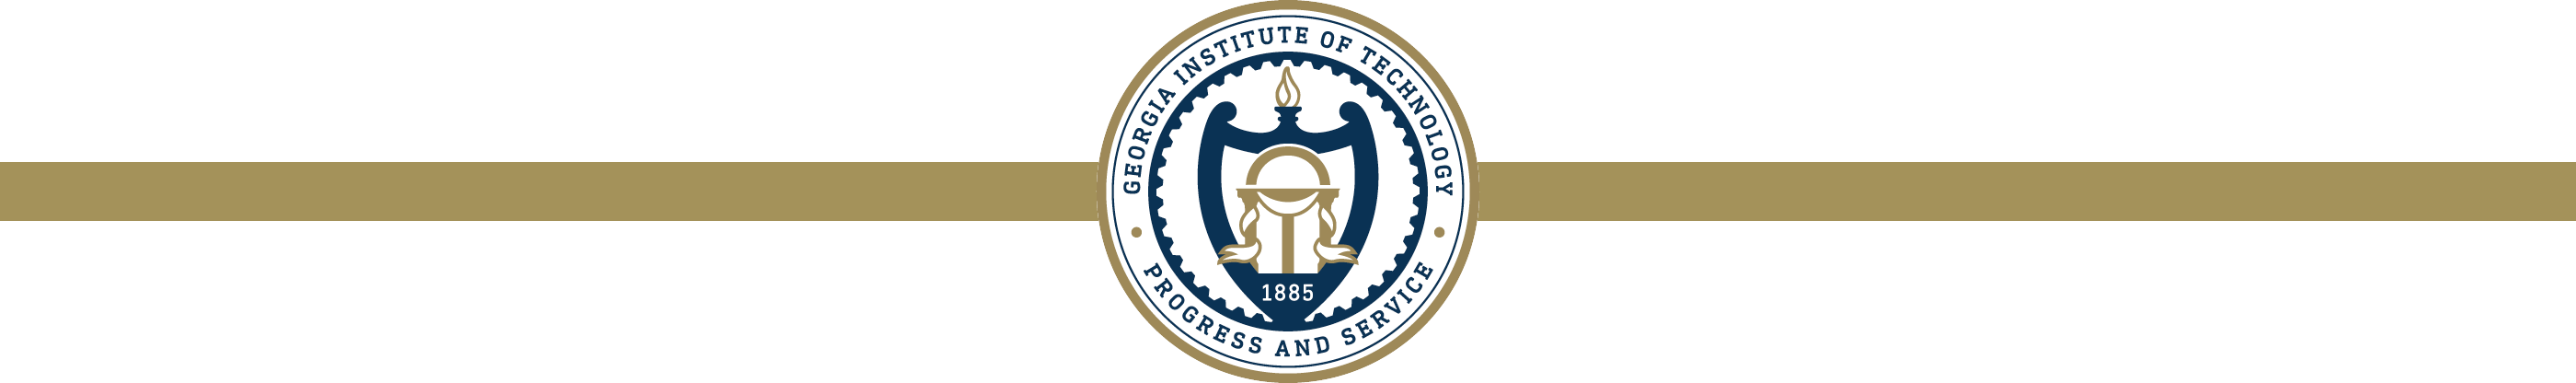 Georgia Tech seal